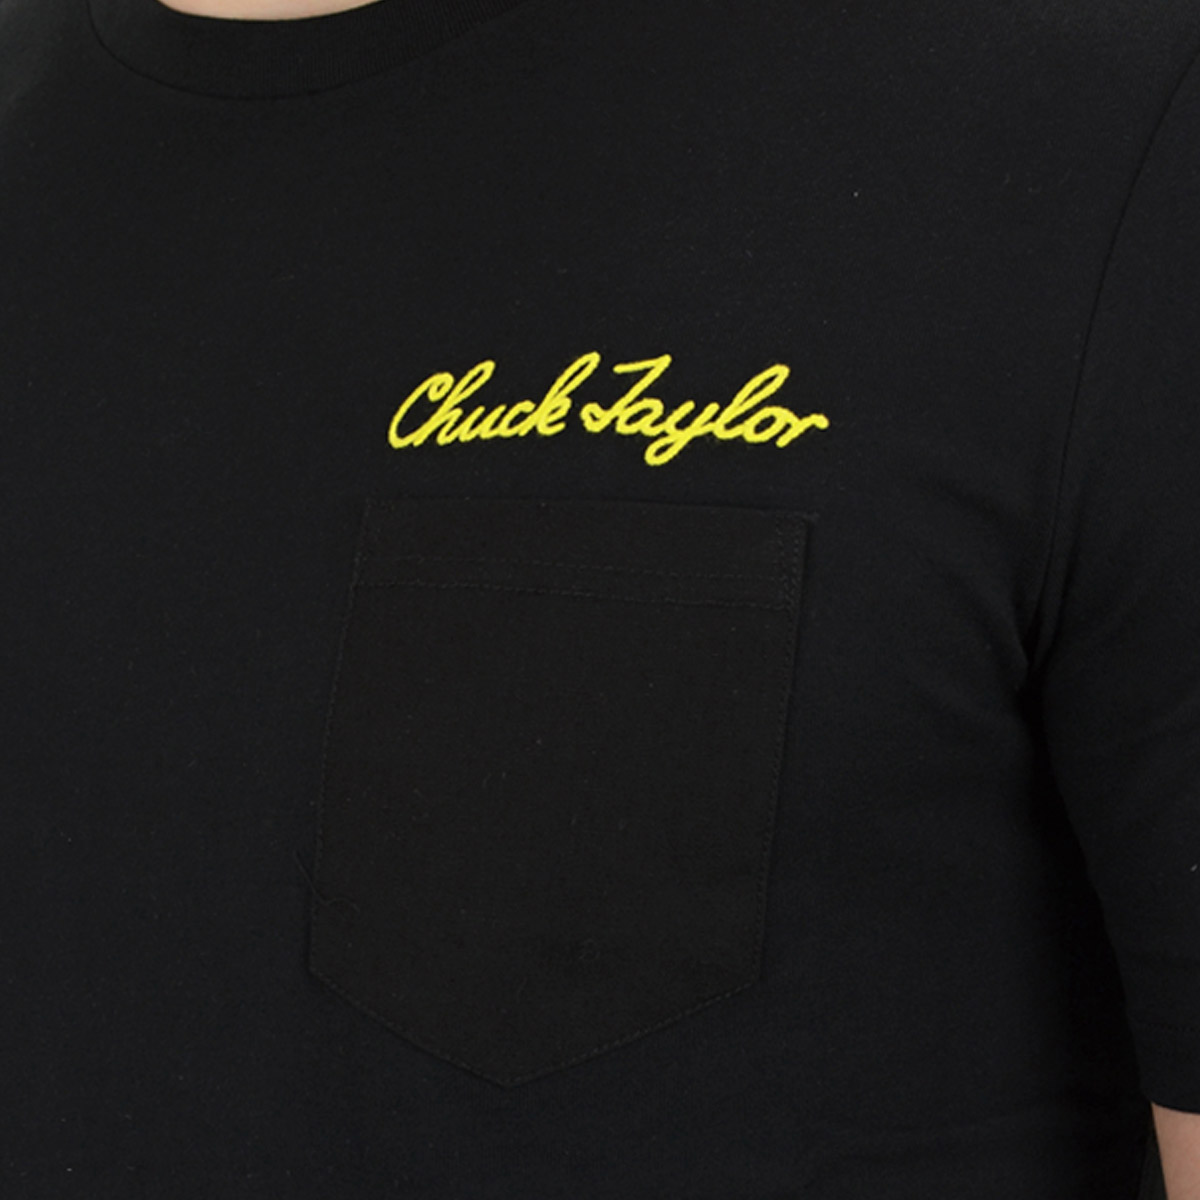 converse chuck taylor shirt